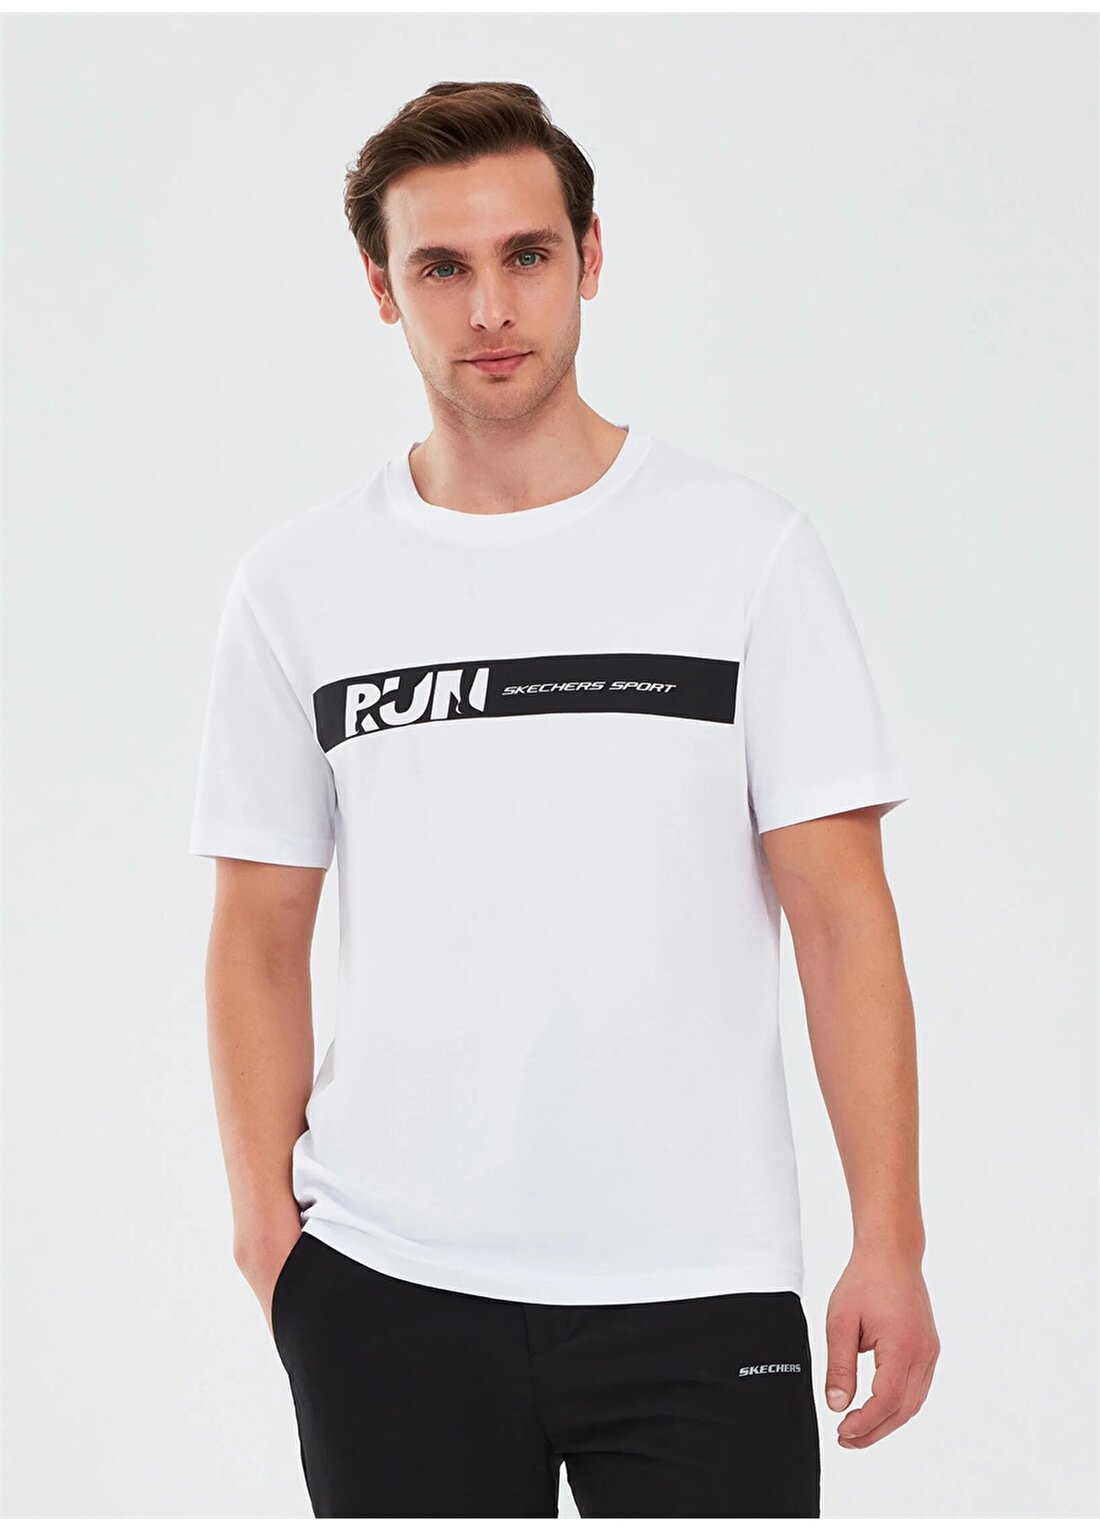 Skechers Beyaz Erkek Bisiklet Yaka Regular Fit T-Shirt S241009-100 Graphic T-Shirt M Short